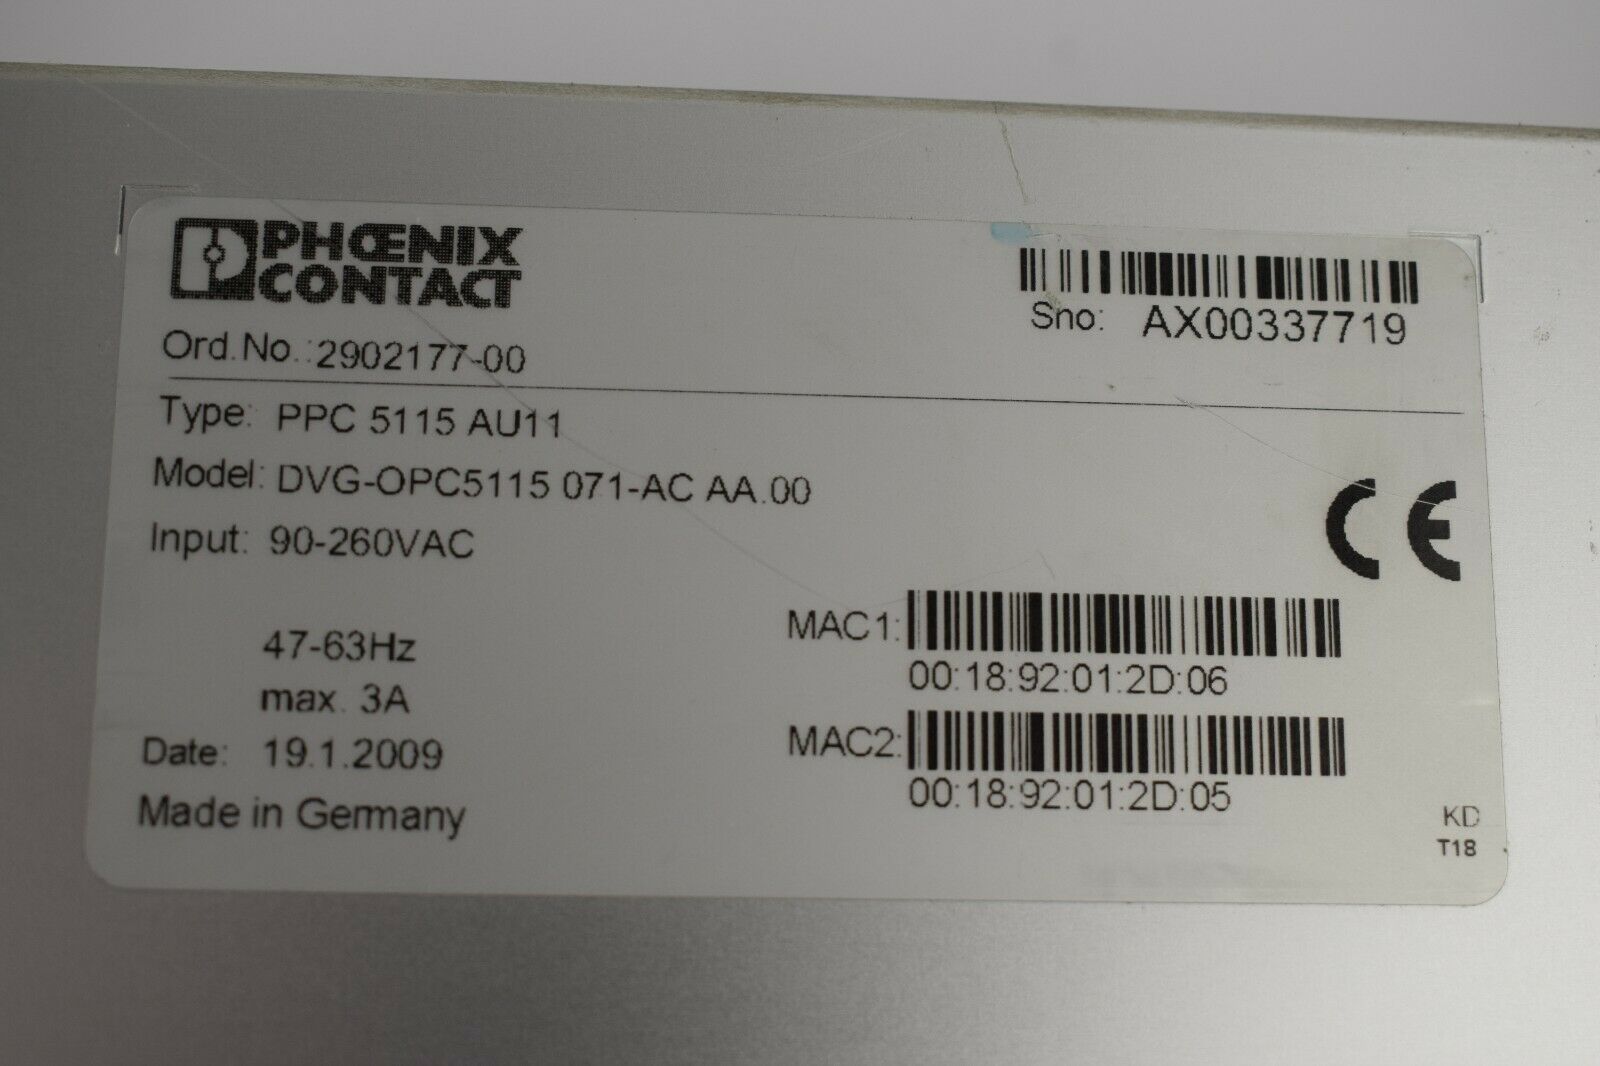 Phoenix Contact Panel PPC 5115 AU11 DVG-OPC5115 071-AC AA.00